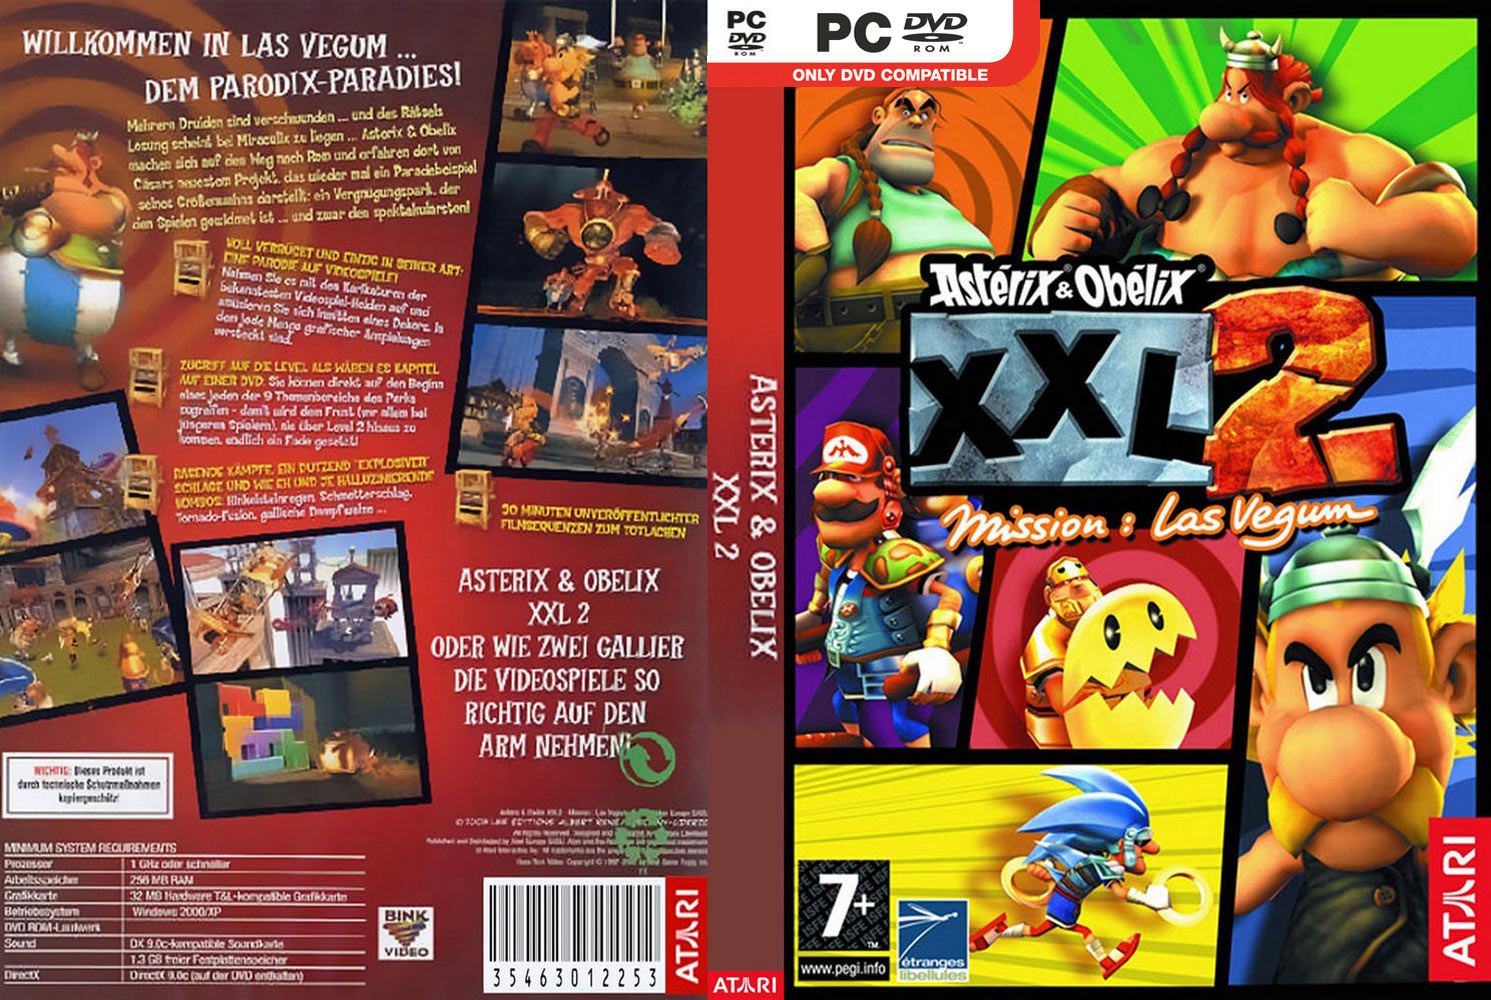 Asterix & Obelix XXL 2: Mission Las Vegum - DVD obal